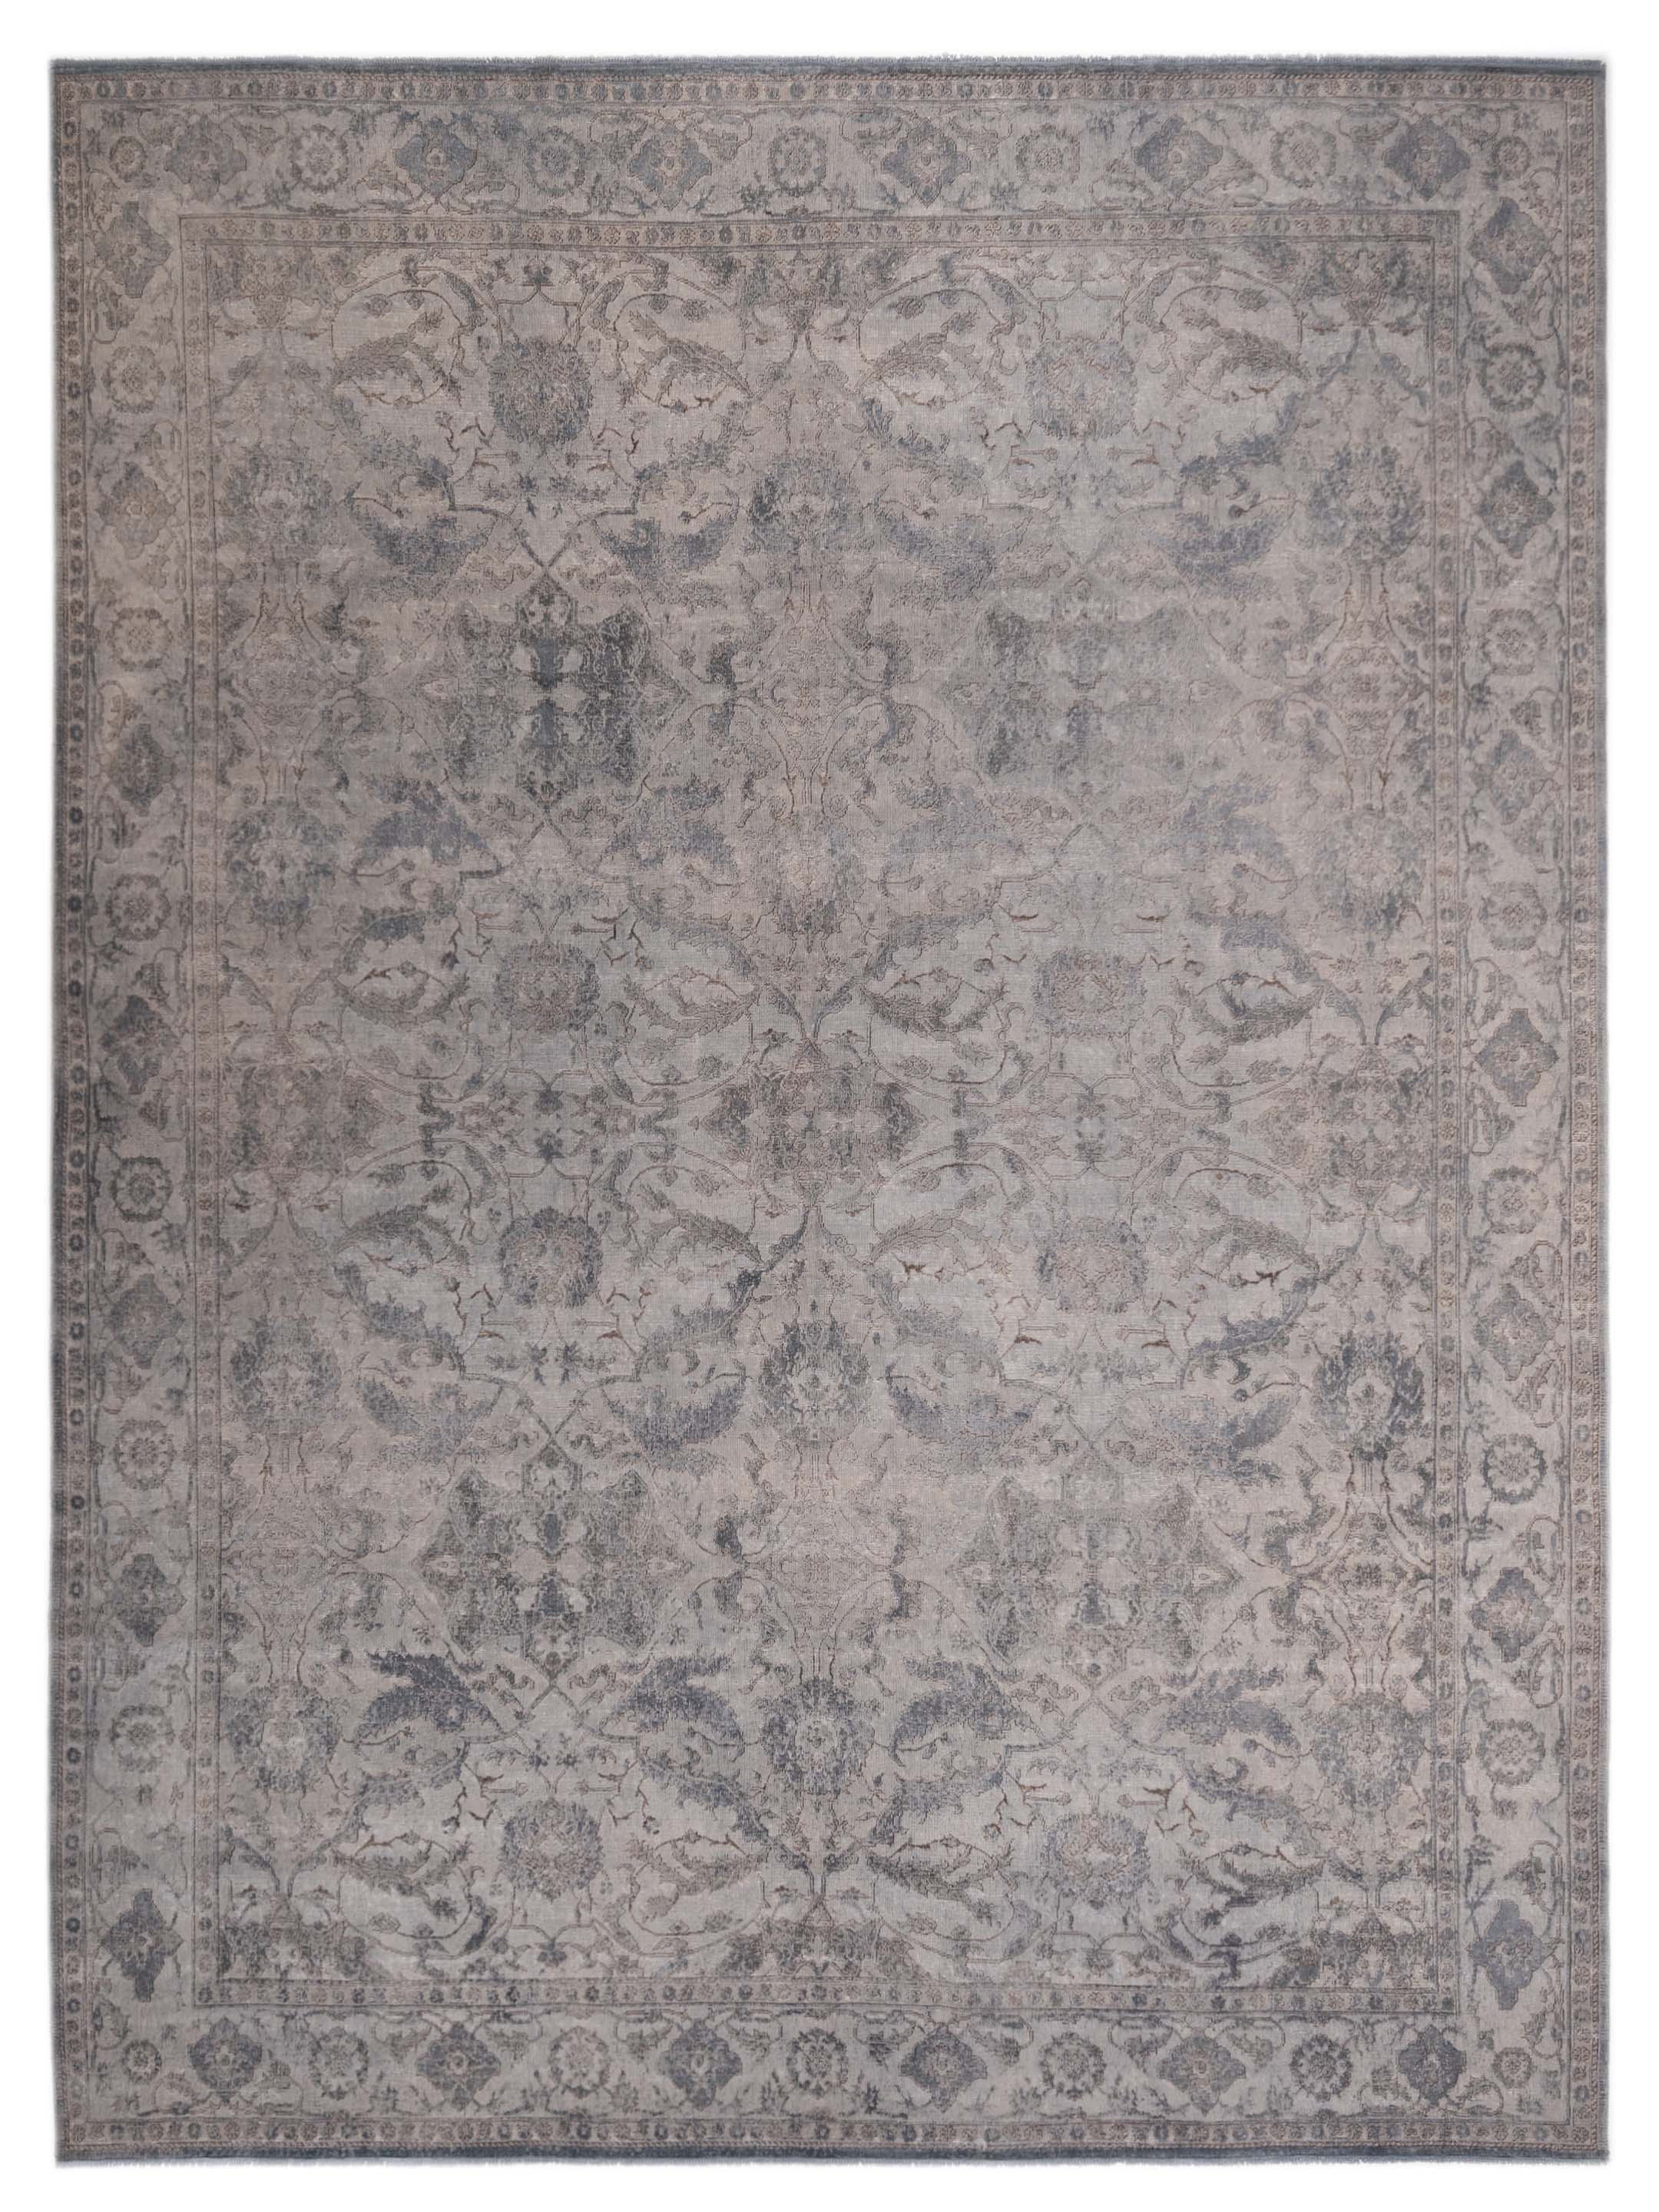 Light Gray vintage hand-knotted Turkish area rug	